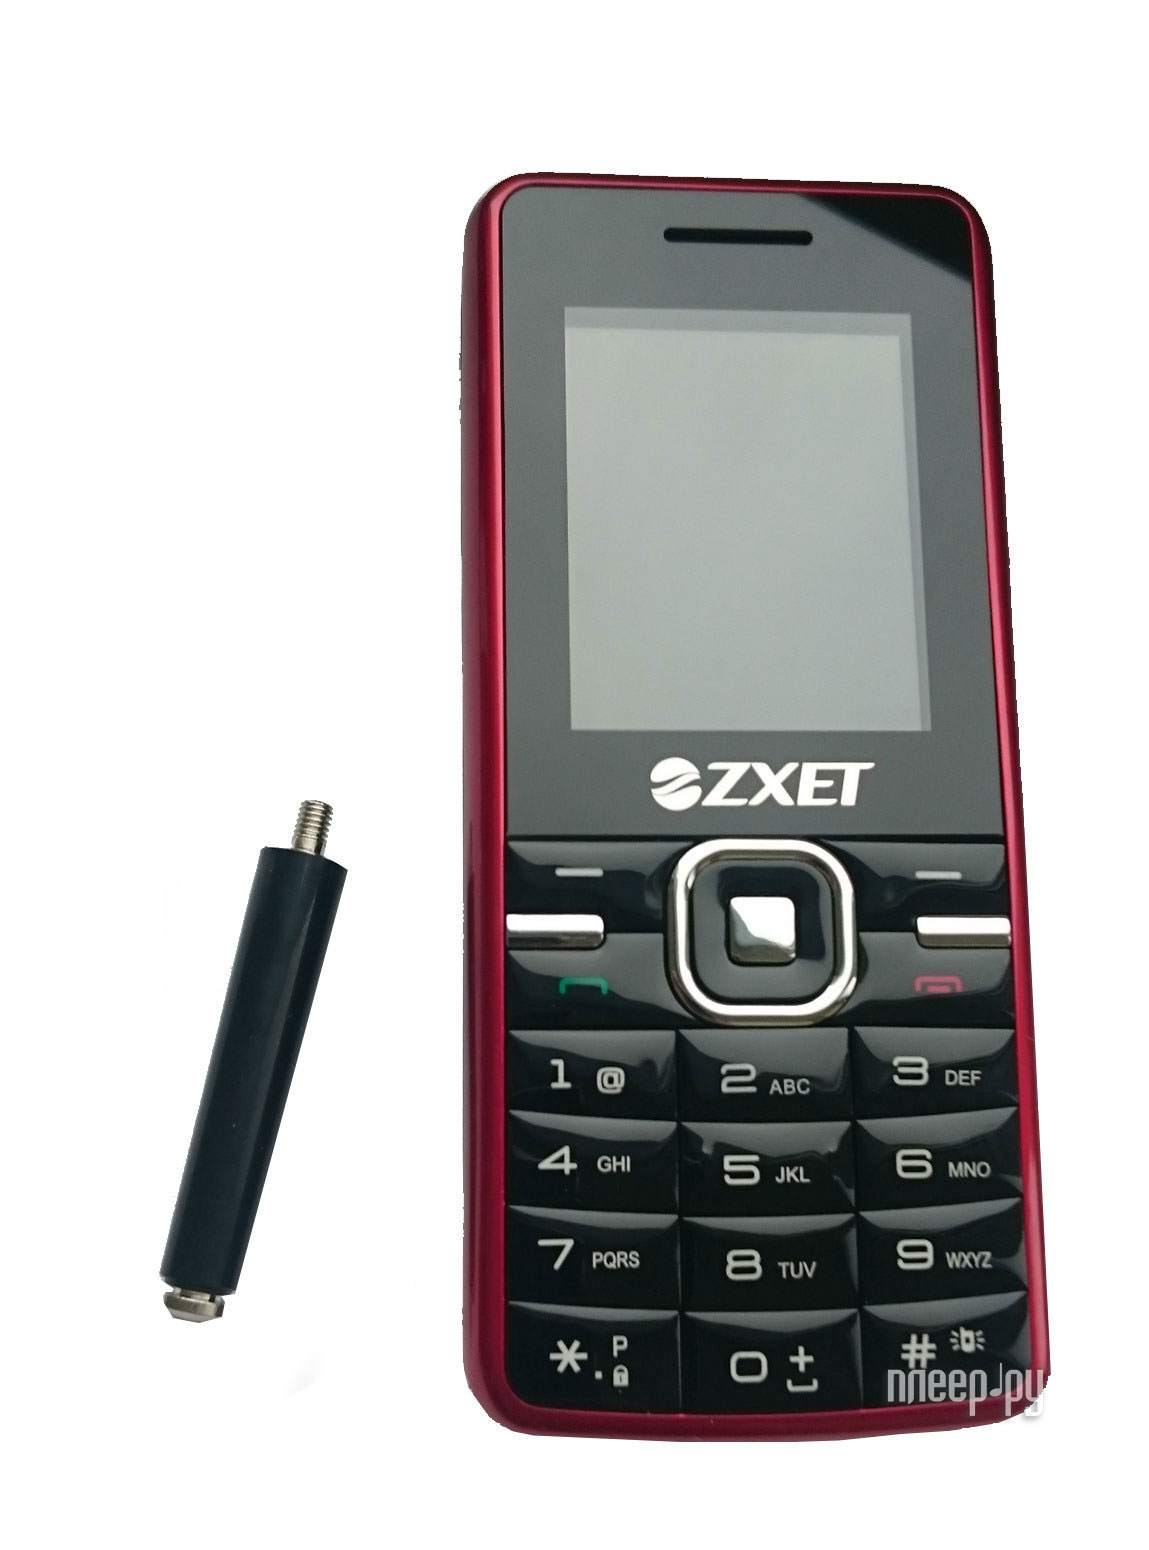   Zxet 450 CDMA Black-Red 